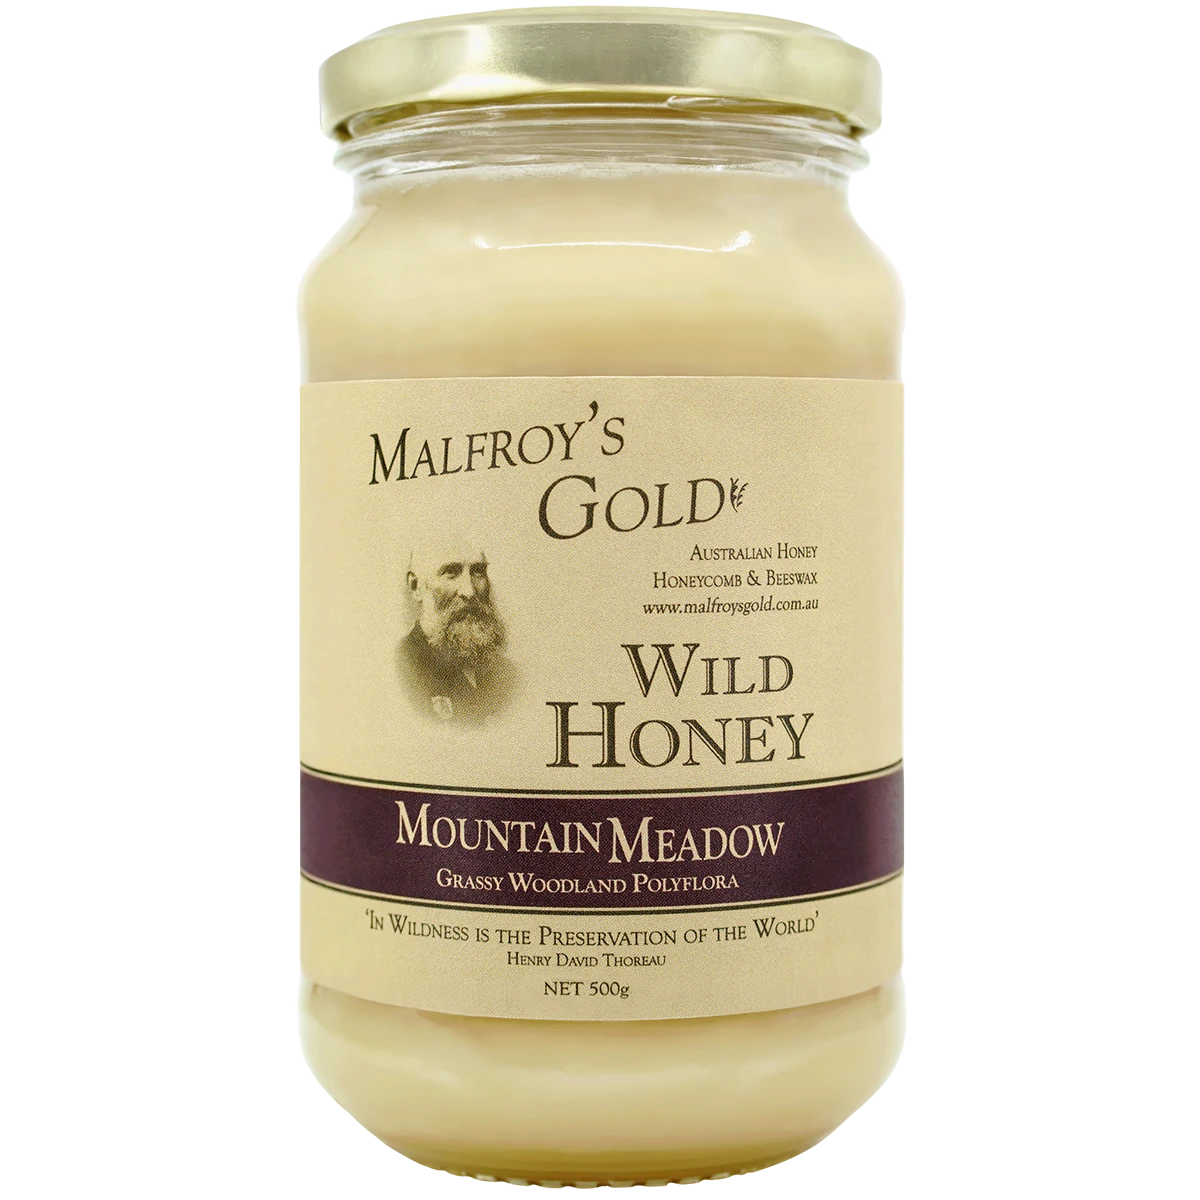 Malfroy's Gold 500g Wild Honey Mountain Meadow Polyflora